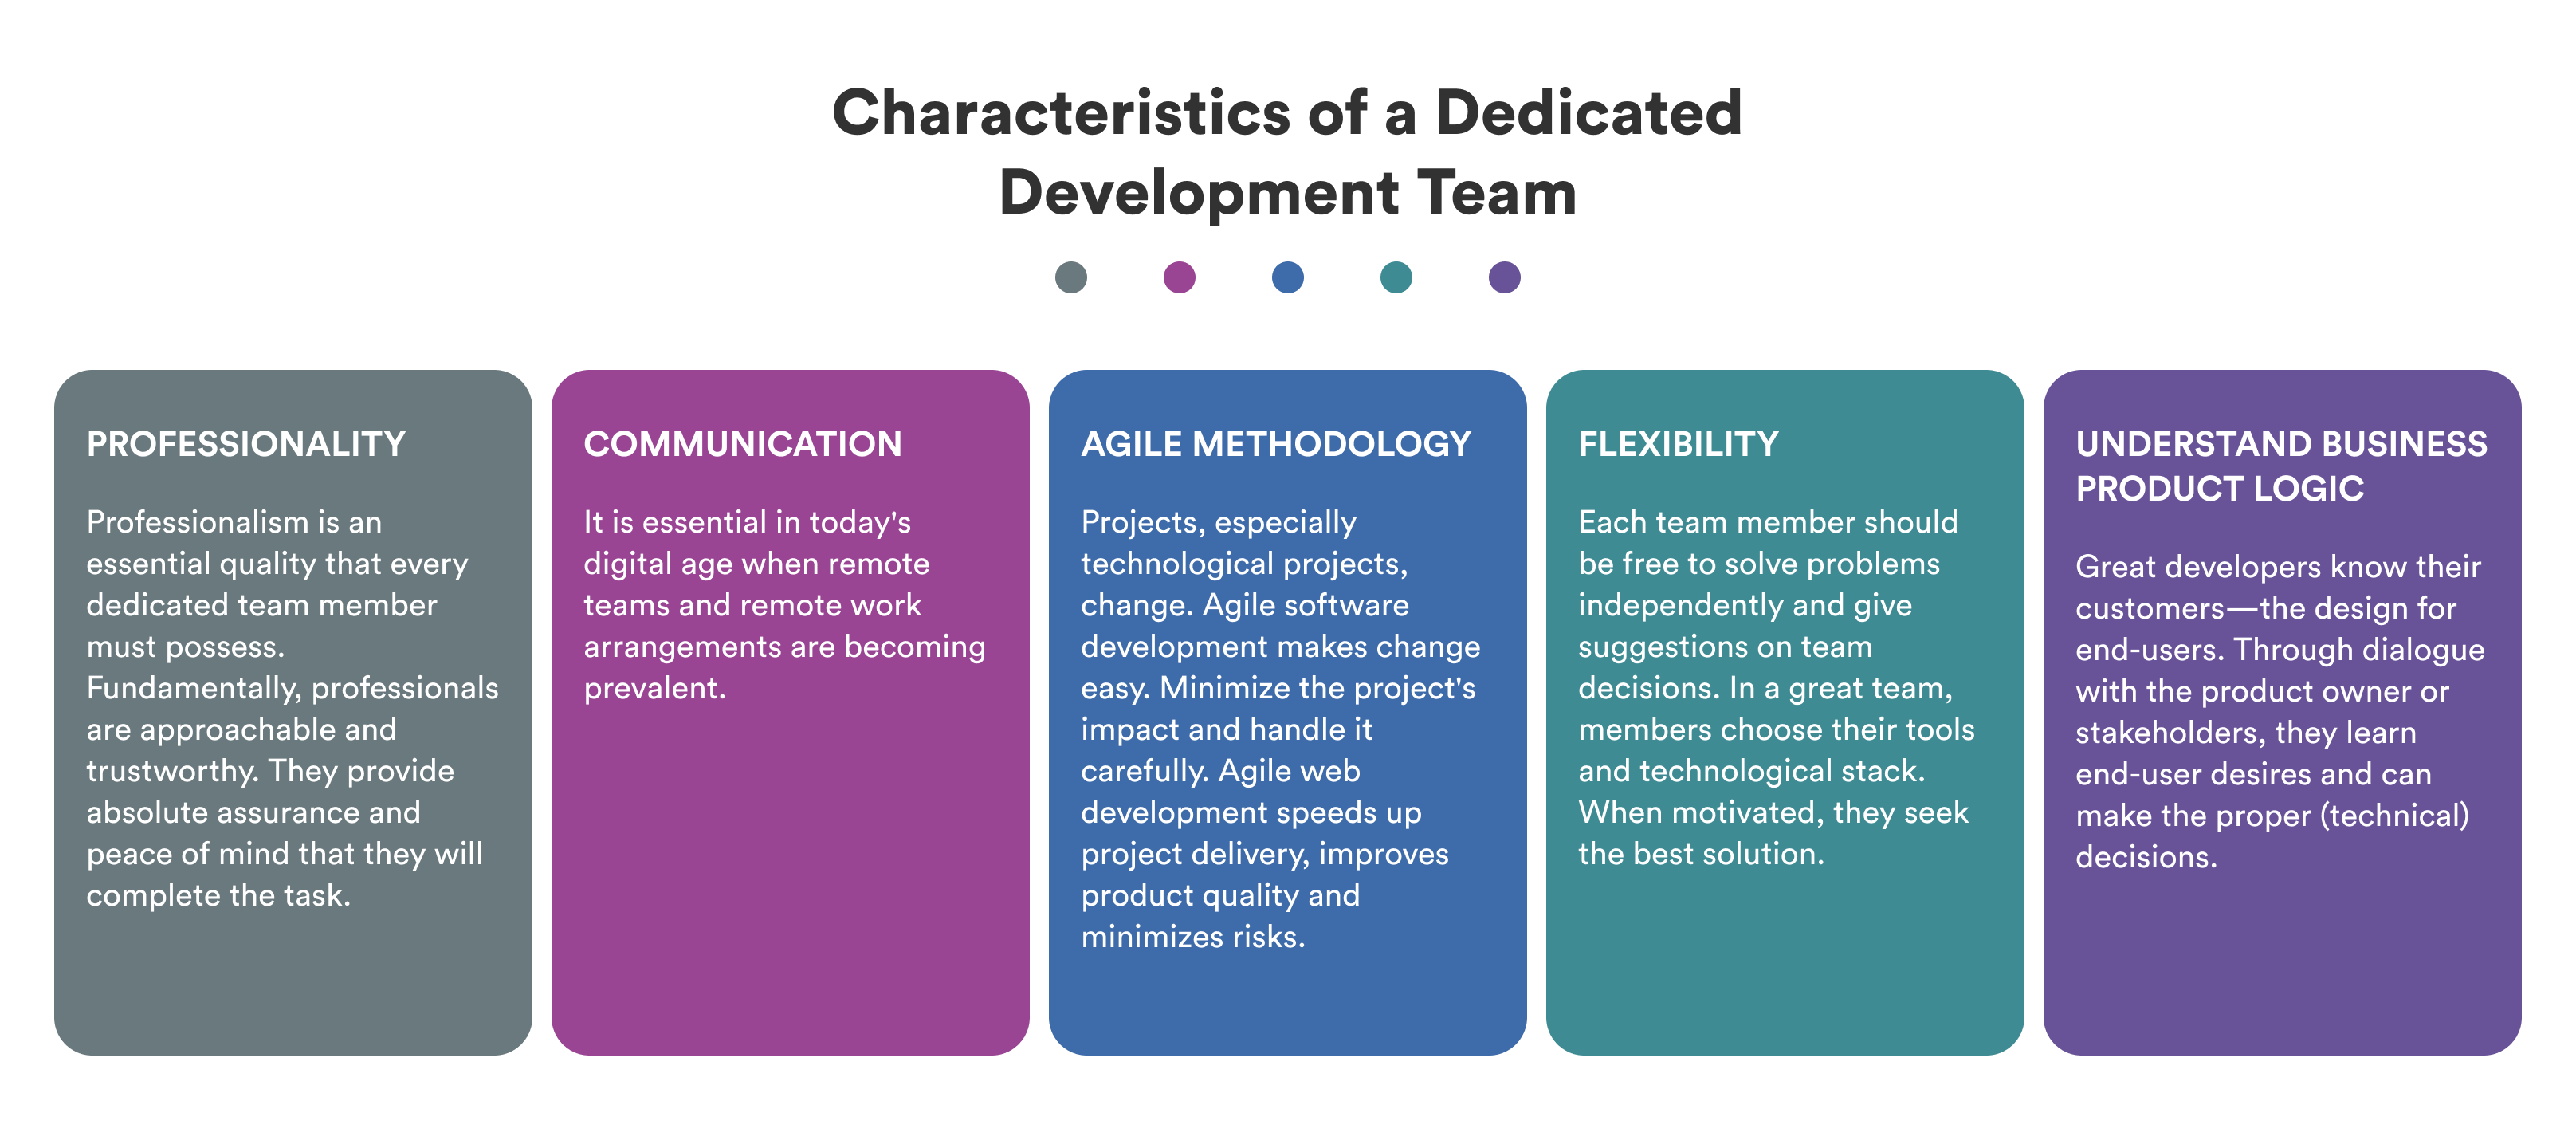 Characteristics of a dedicated development team